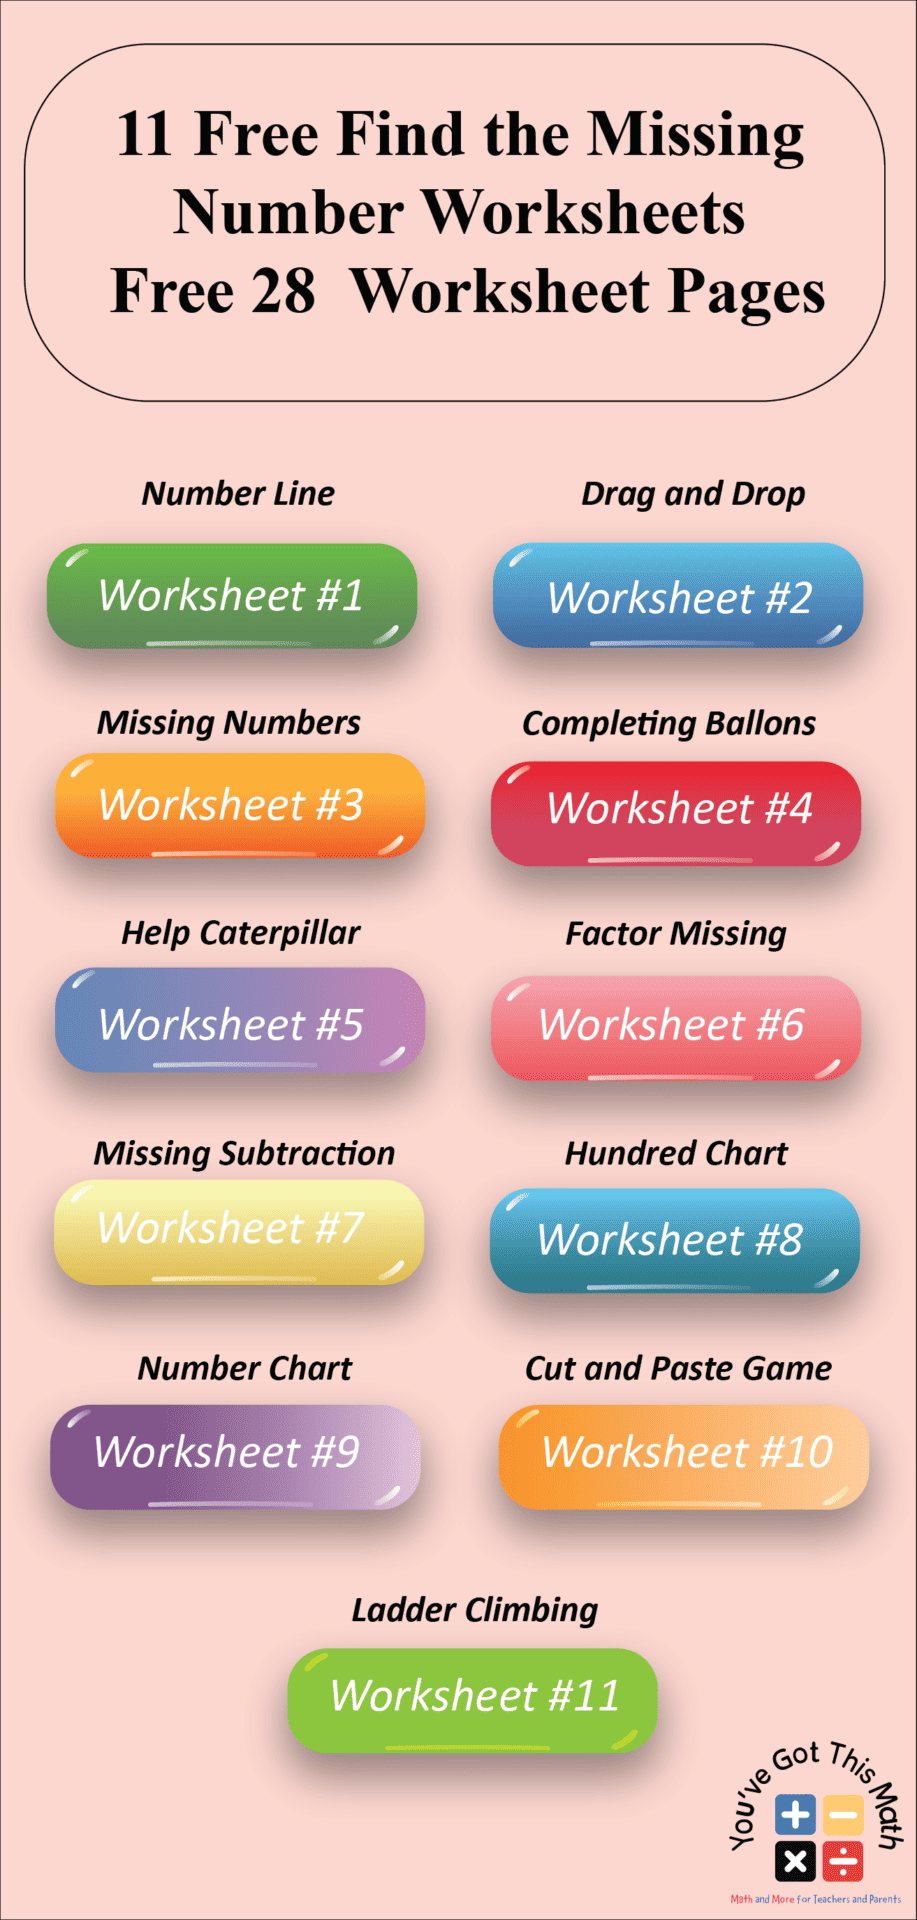 11-free-find-the-missing-number-worksheets